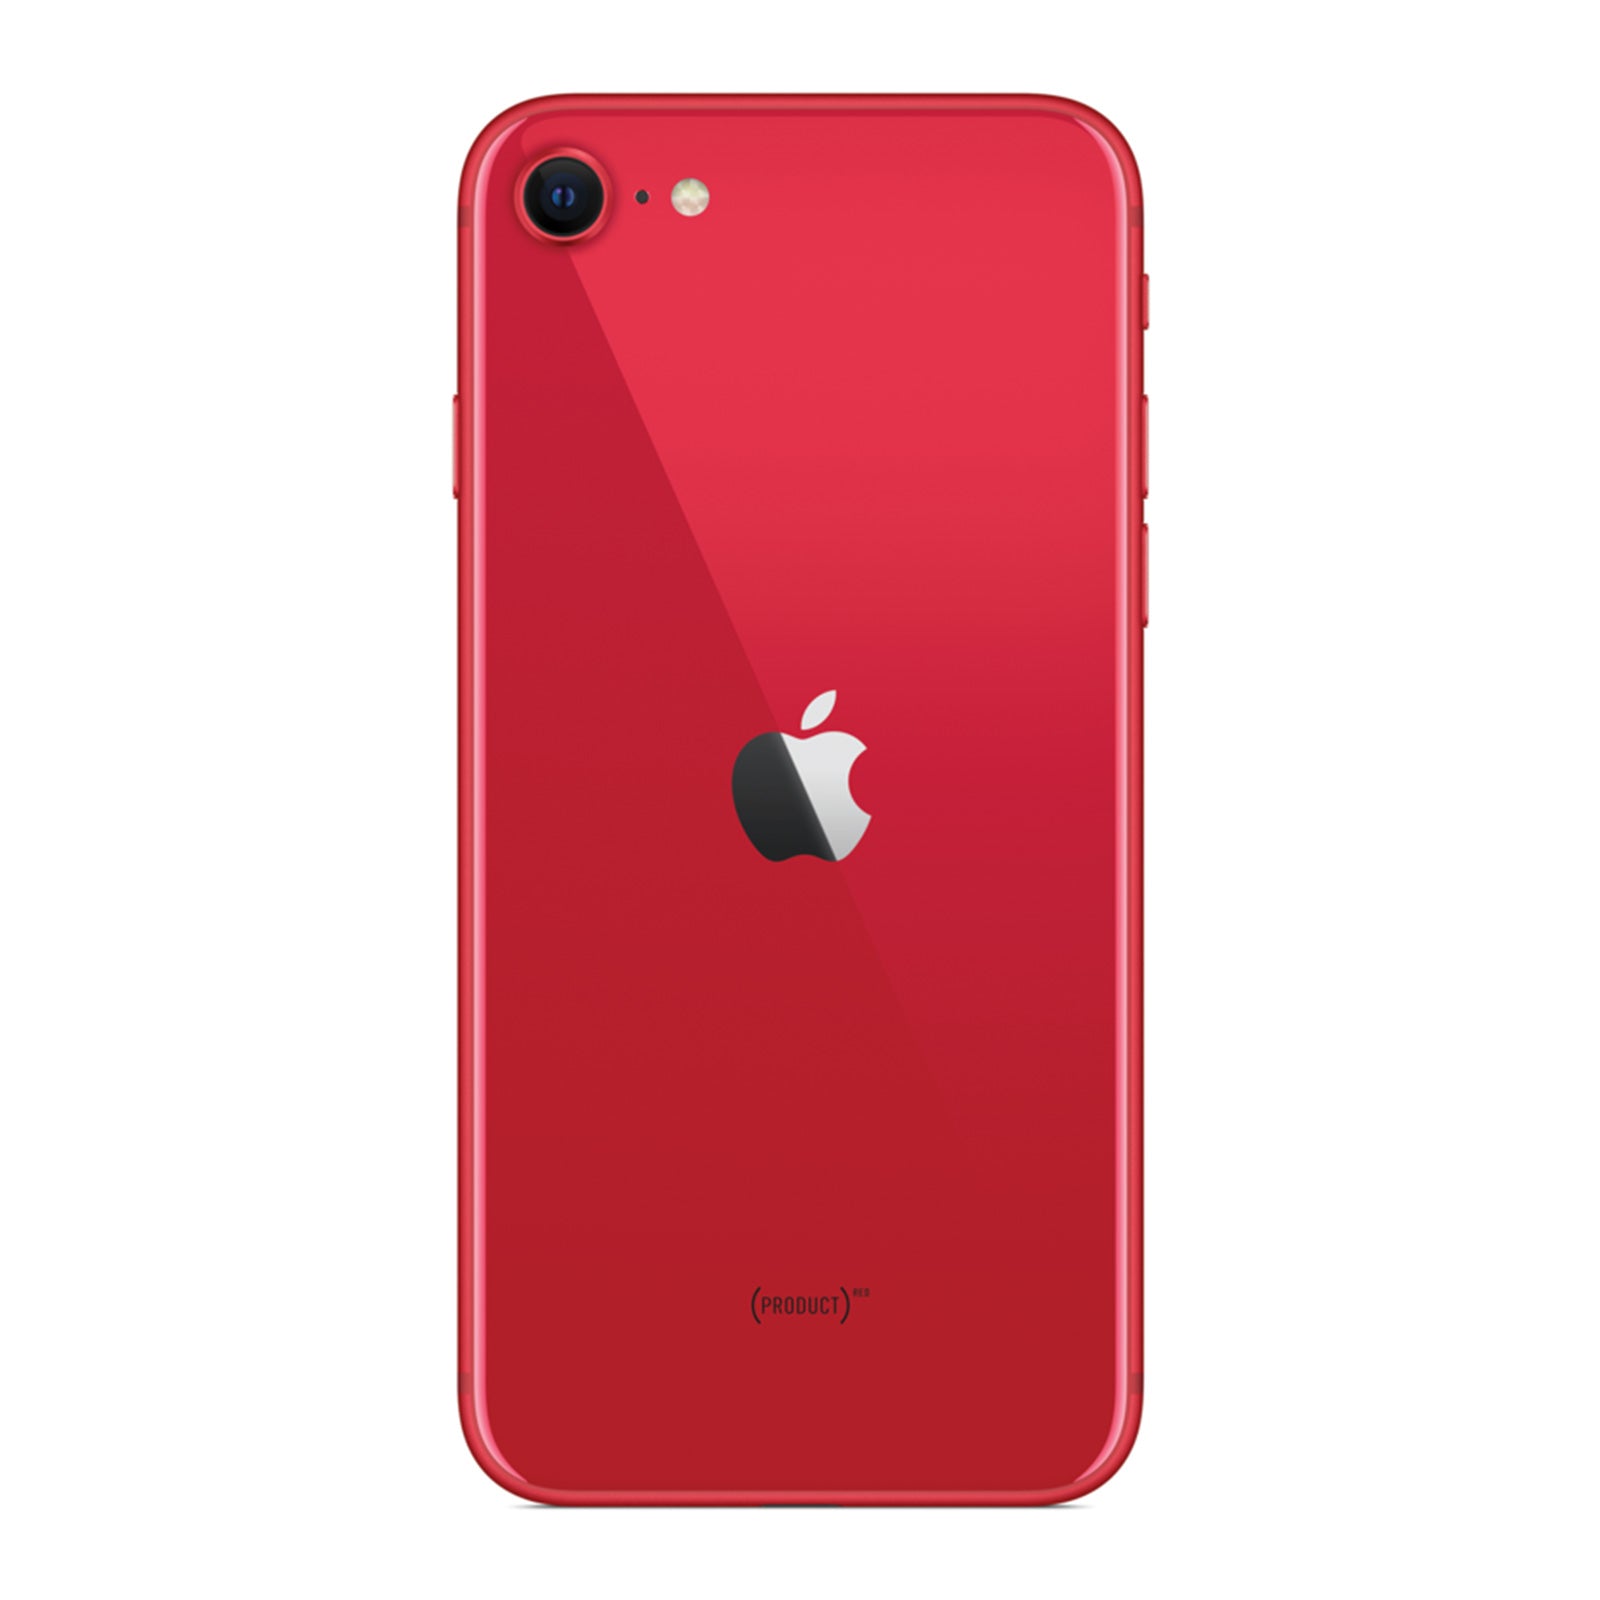 Apple iPhone SE 2nd Gen 128GB Product Red Fair Unlocked